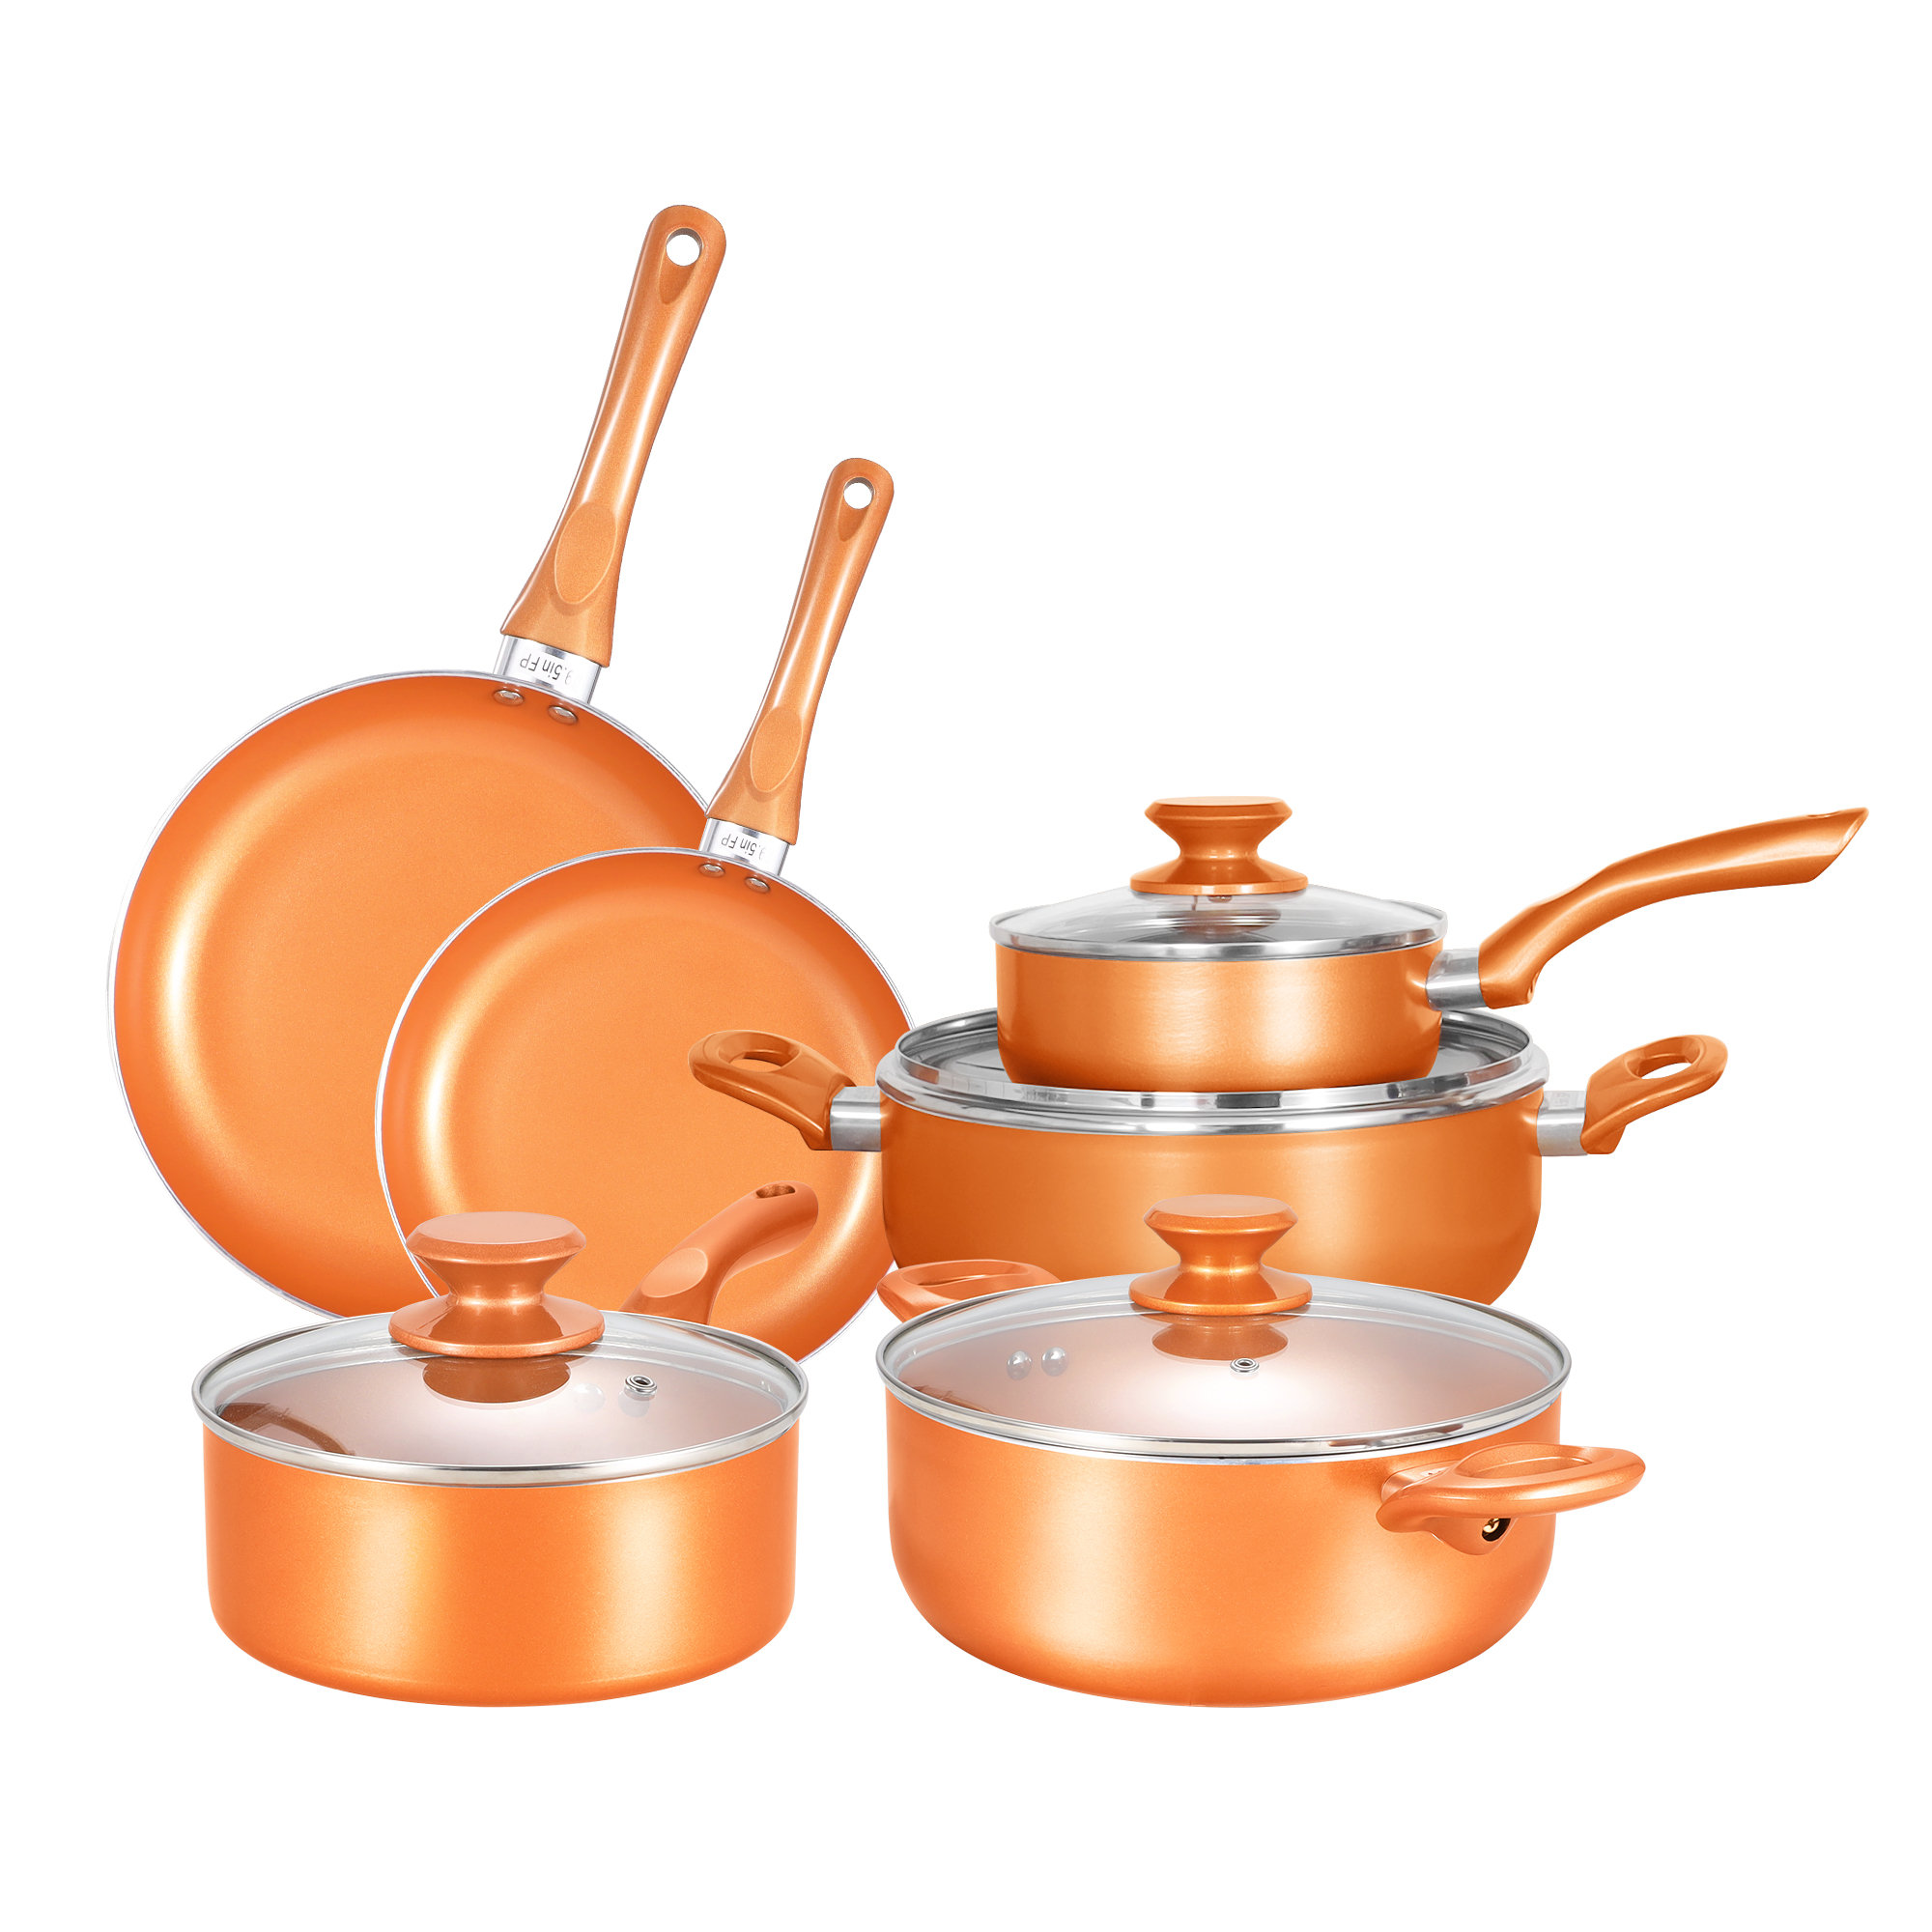 Copper Pots and Pans Set Nonstick 10-Piece Ceramic Cookware Set, Stainless  Steel Handles, Dishwasher & Oven Safe, PFOA/PFAS-Free, Orange